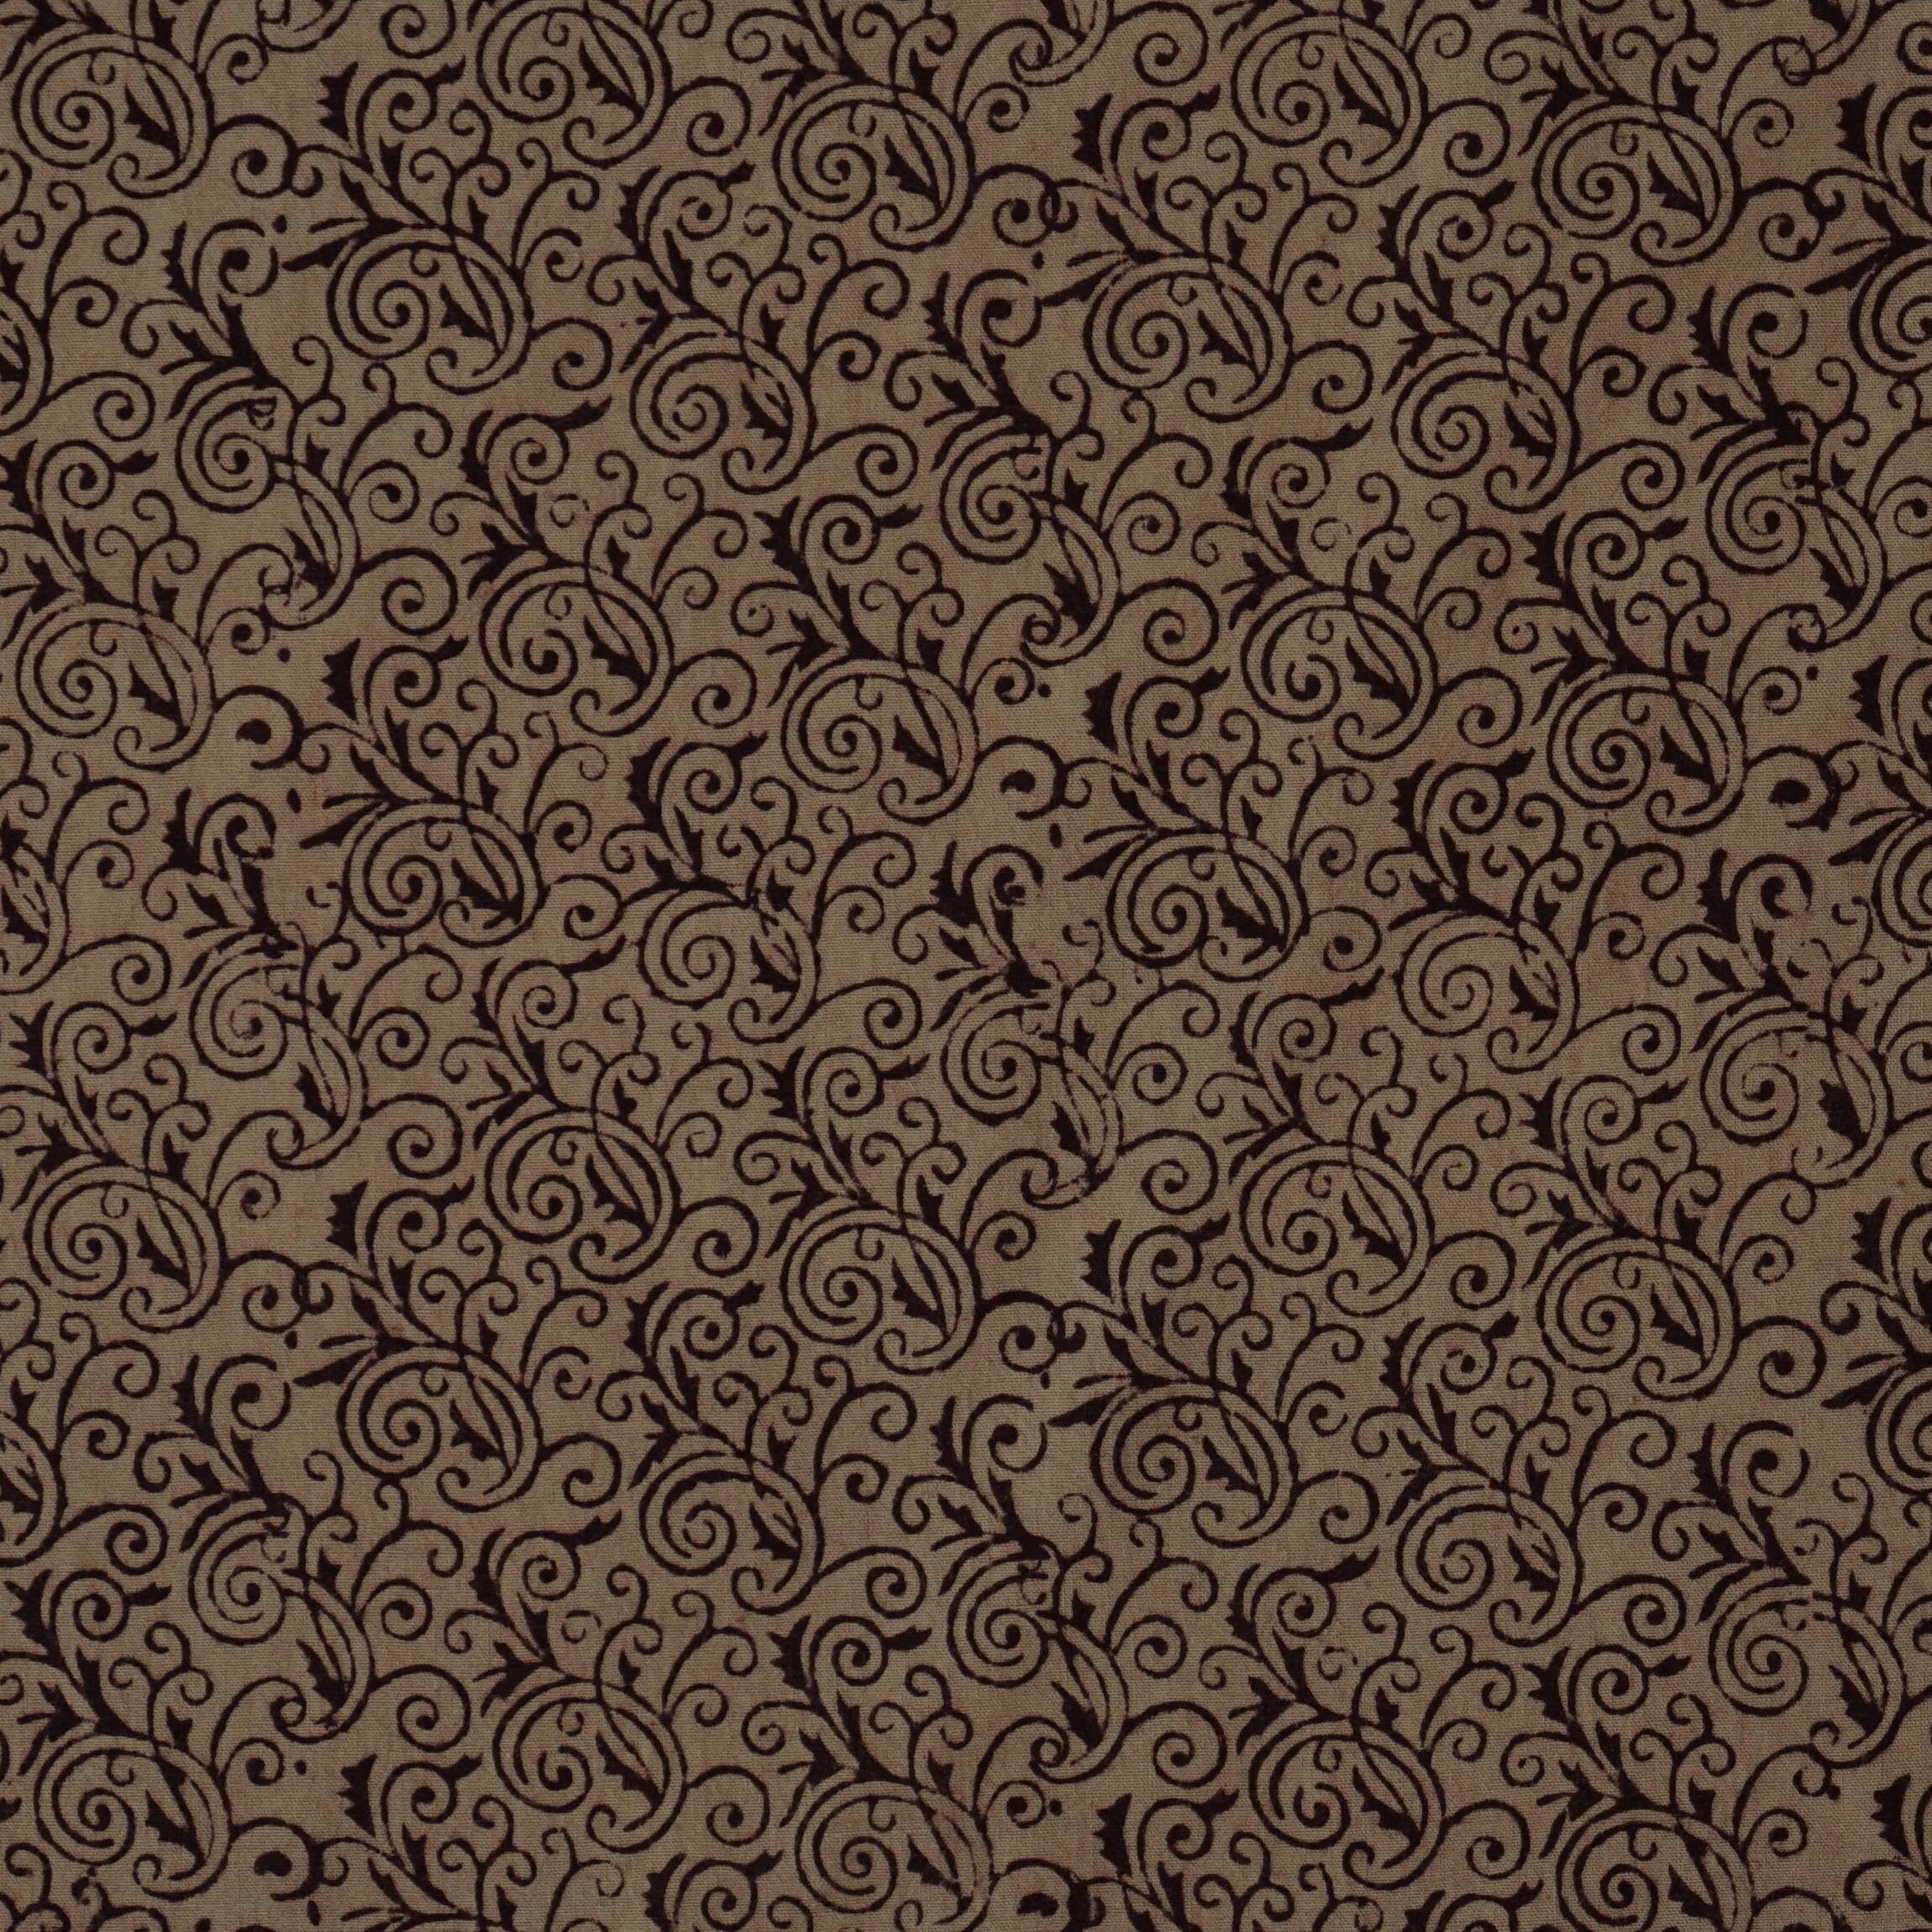 100% Block-Printed Cotton Fabric From India- Bagh - Iron Rust Black & Indigosol Khaki - Quetico Print - Flat